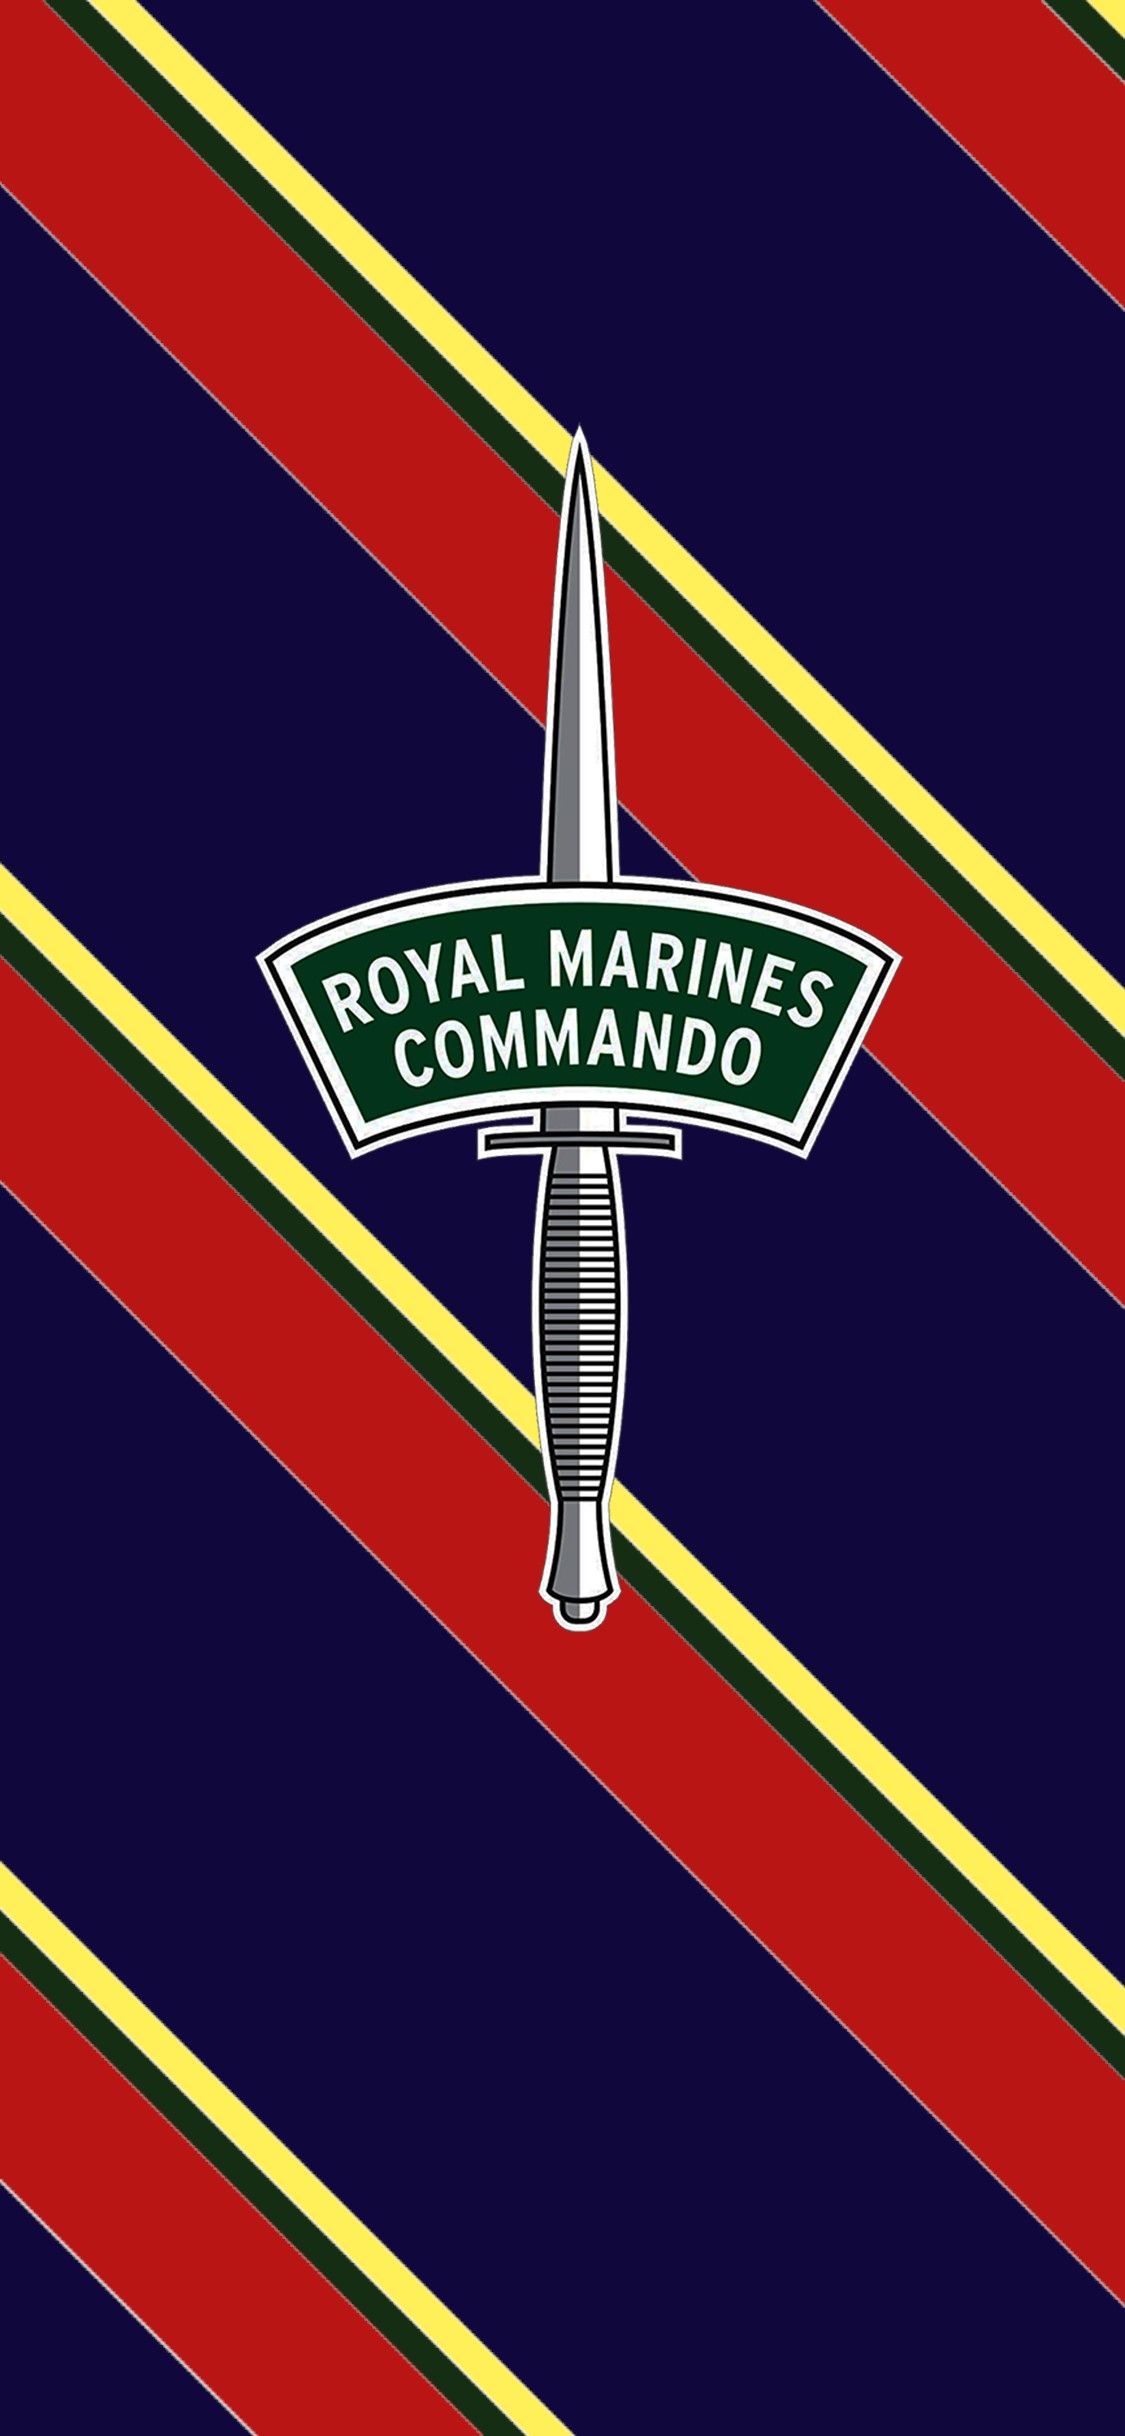 FREE Royal Marines Commando phone wallpaper. Royal marine commando, Royal marines, British commandos